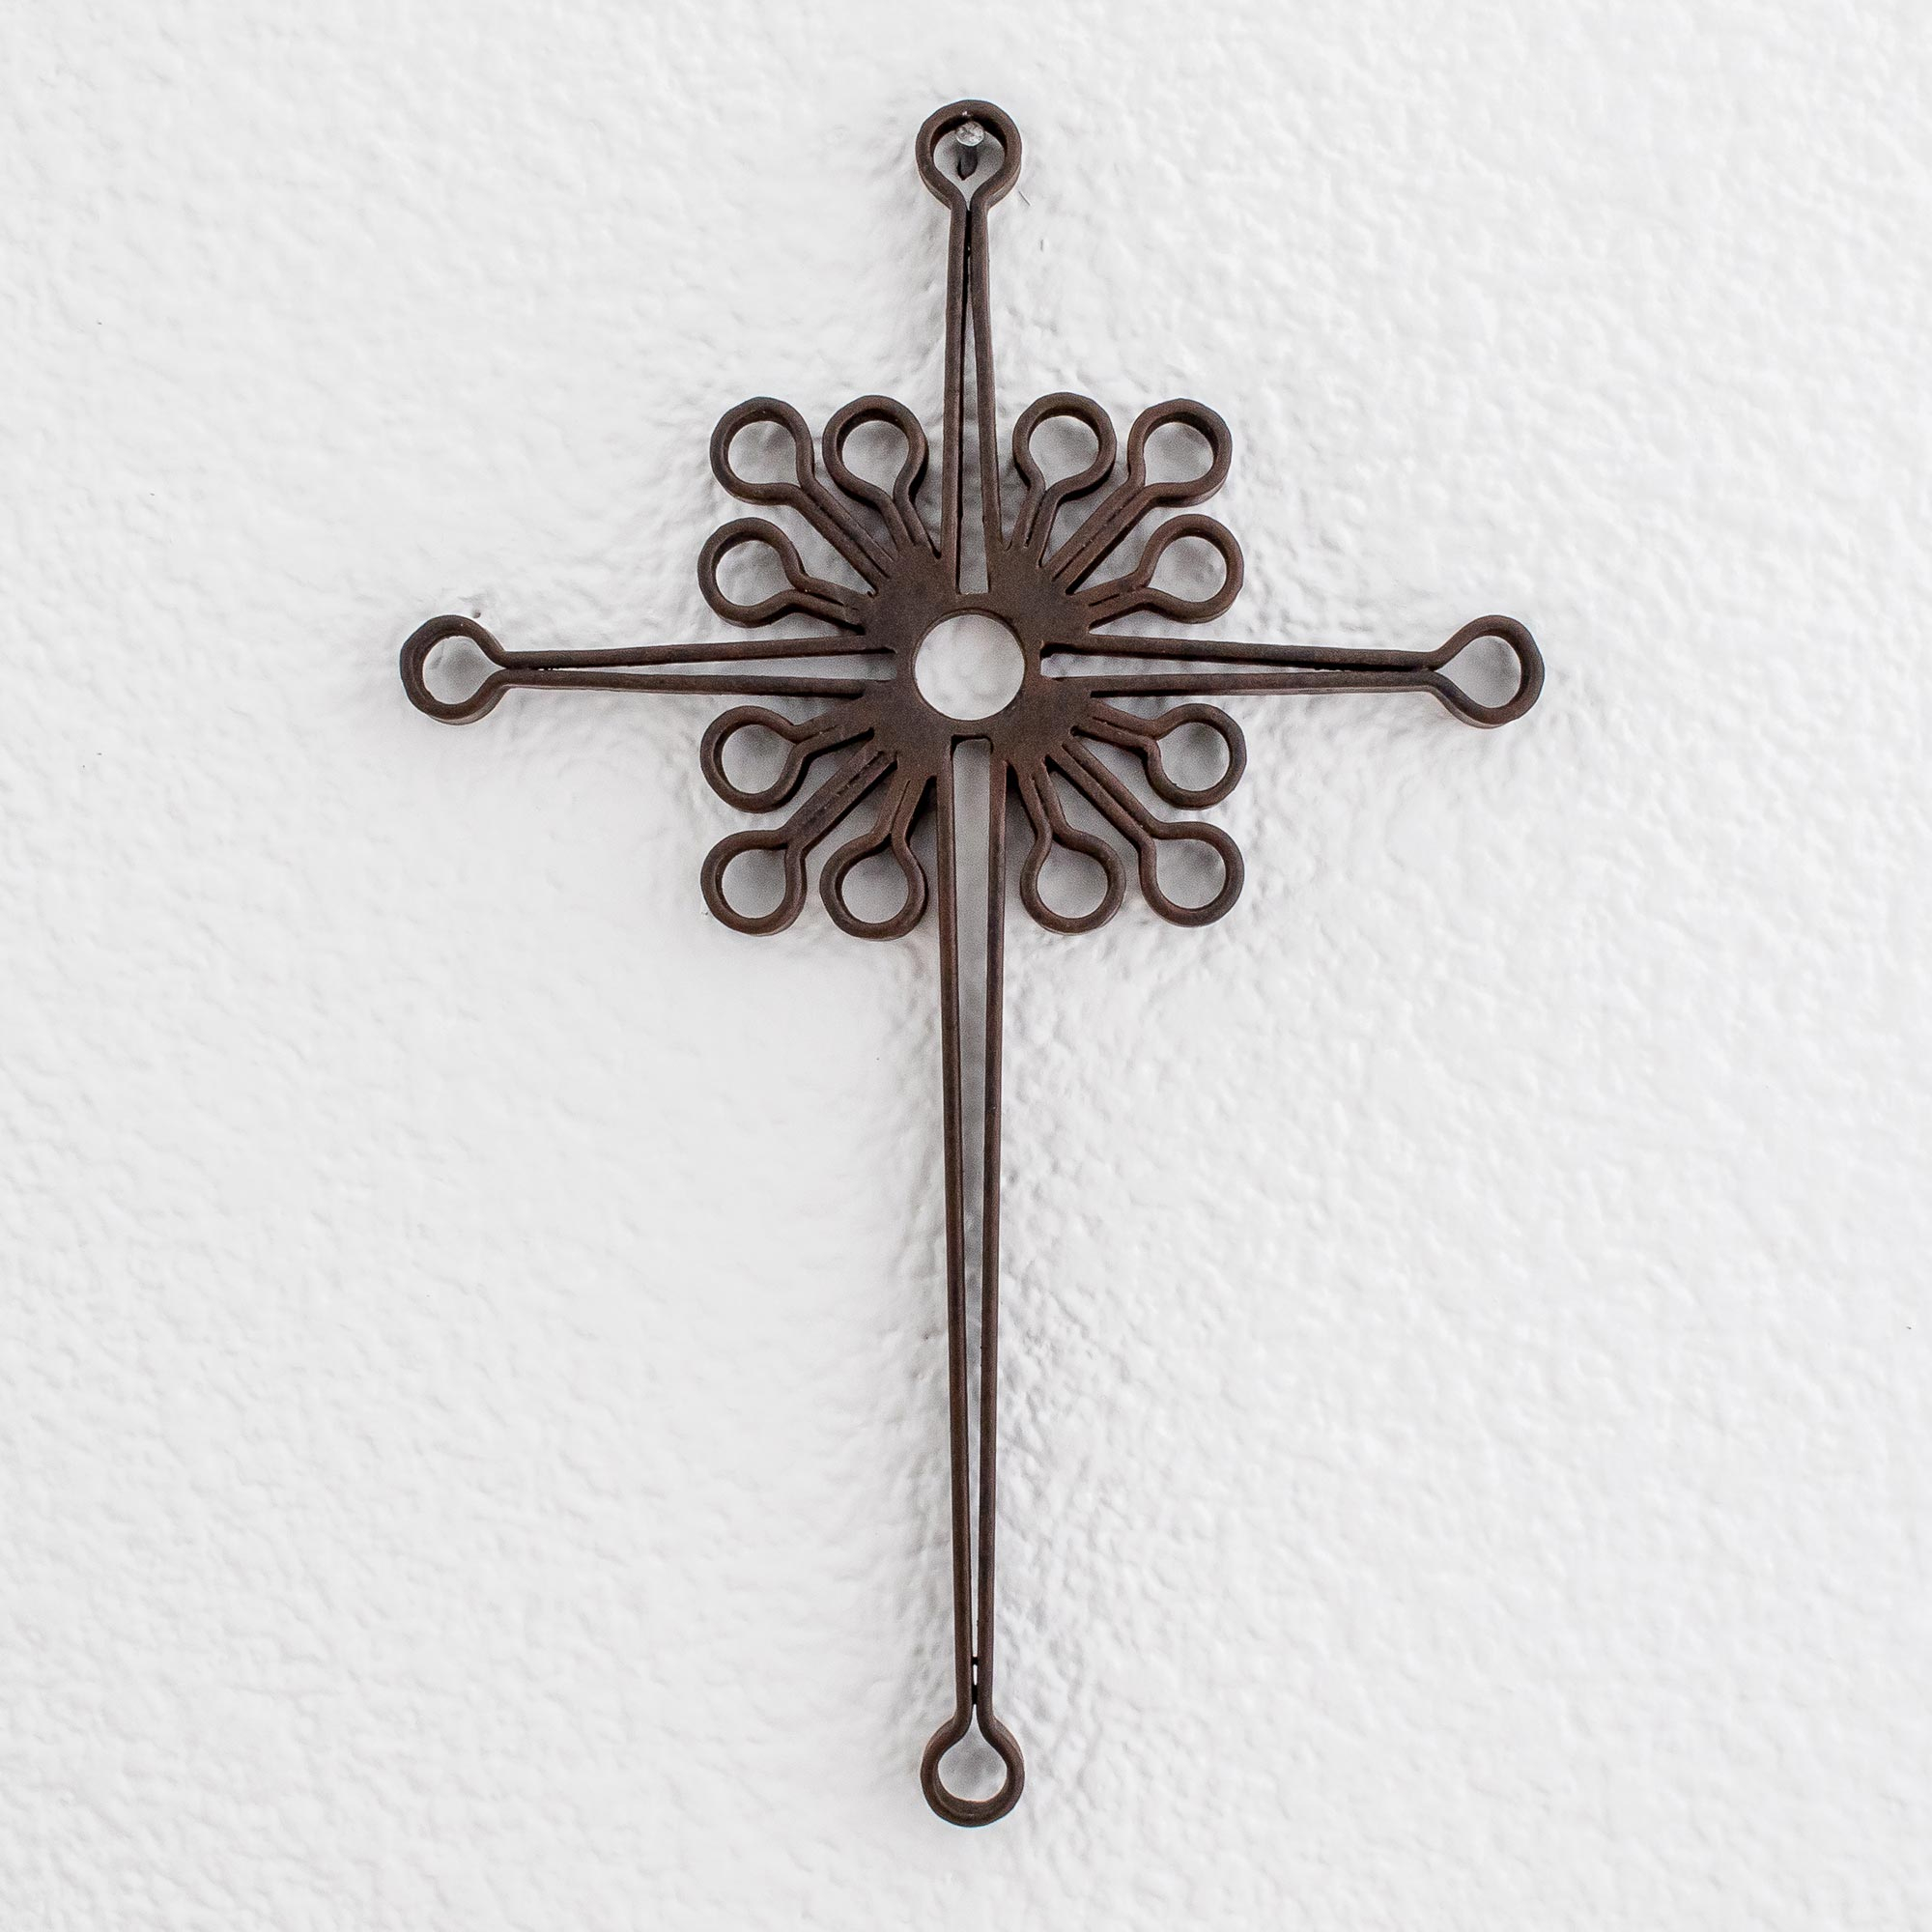 Fair Trade Religious Metal Wall Art Cross Dynamic Novica Canada - Metal Wall Art Crosses